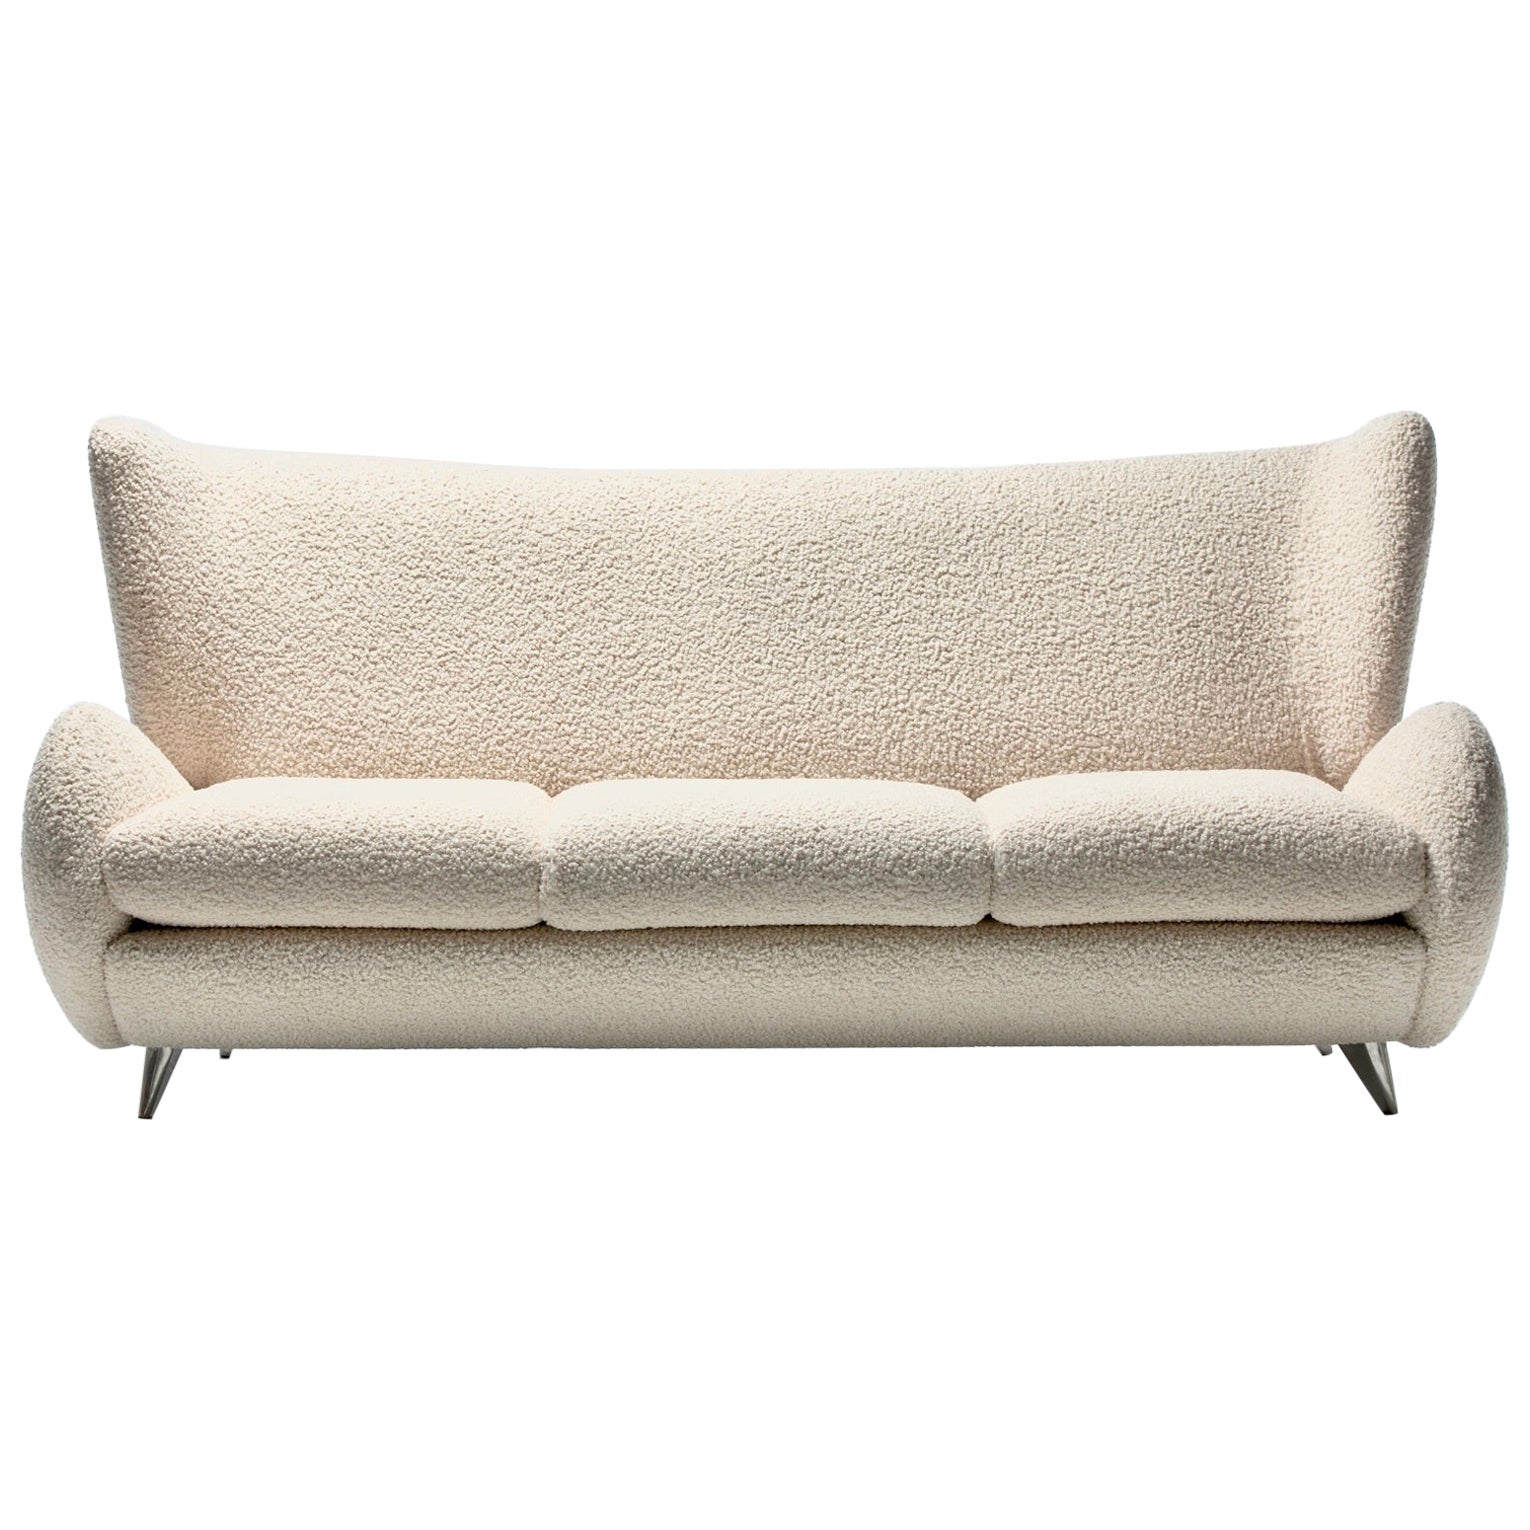 Vladimir Kagan Fiftyish Sofa in Super Soft Ivory White Bouclé For Sale